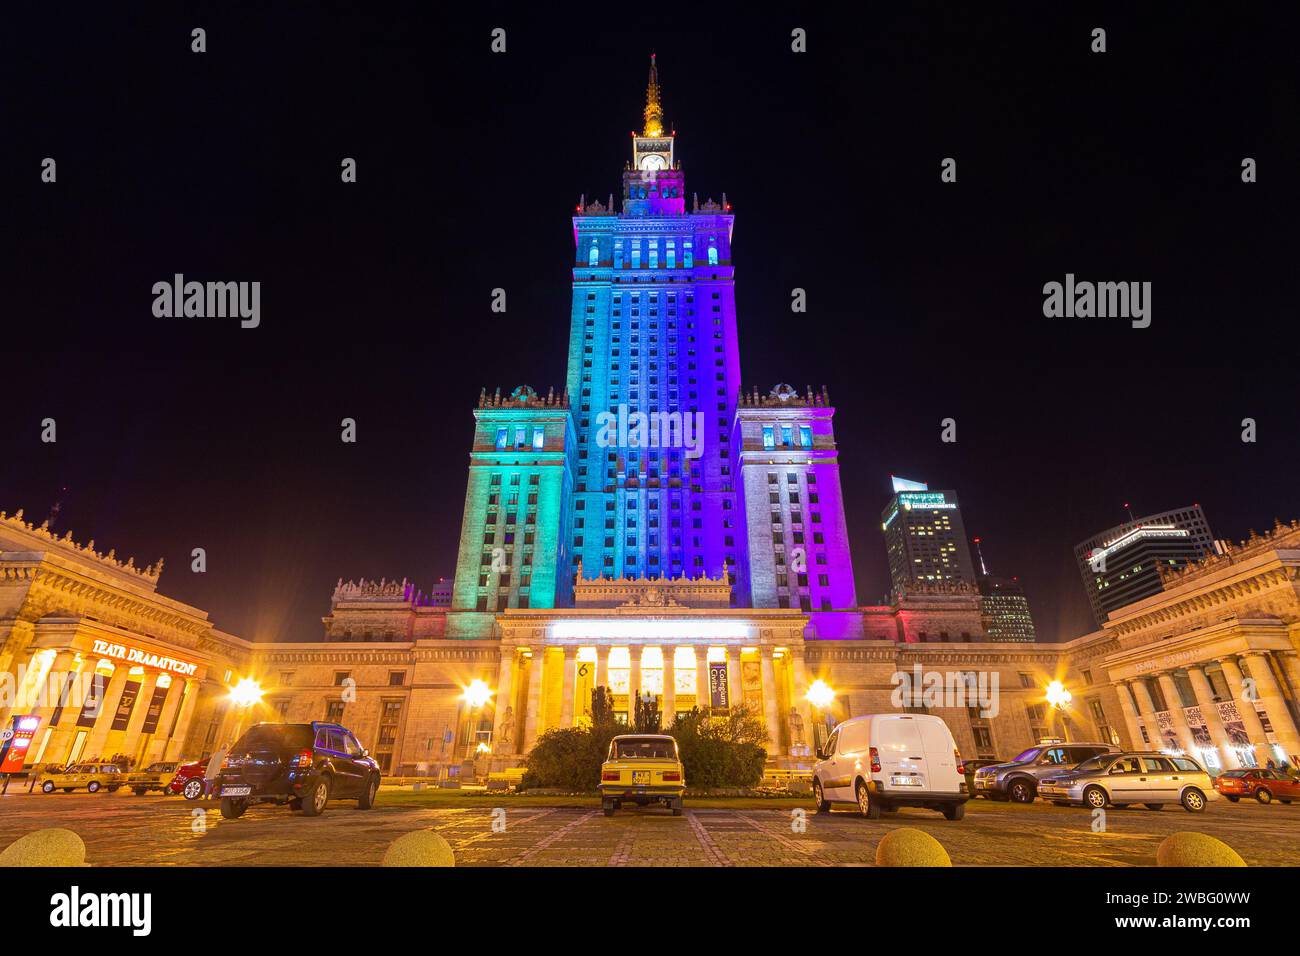 Warsaw, Poland. The Palace of Culture and Science (Palac Kultury i Nauki - PKiN) illuminated at night in many colors Stock Photo